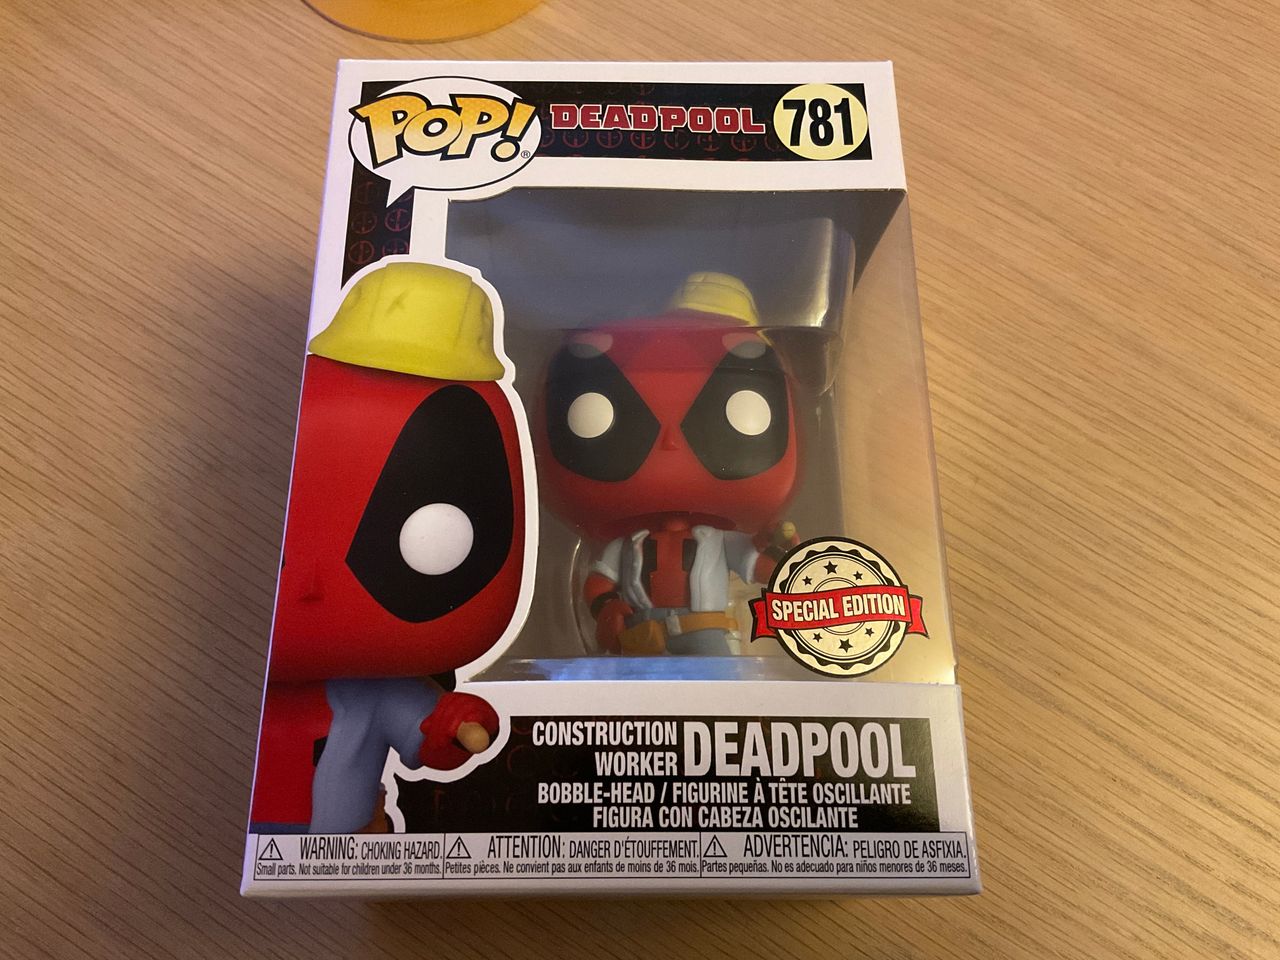 Construction Worker Deadpool #781 Funko Pop! - Deadpool - Walmart Excl